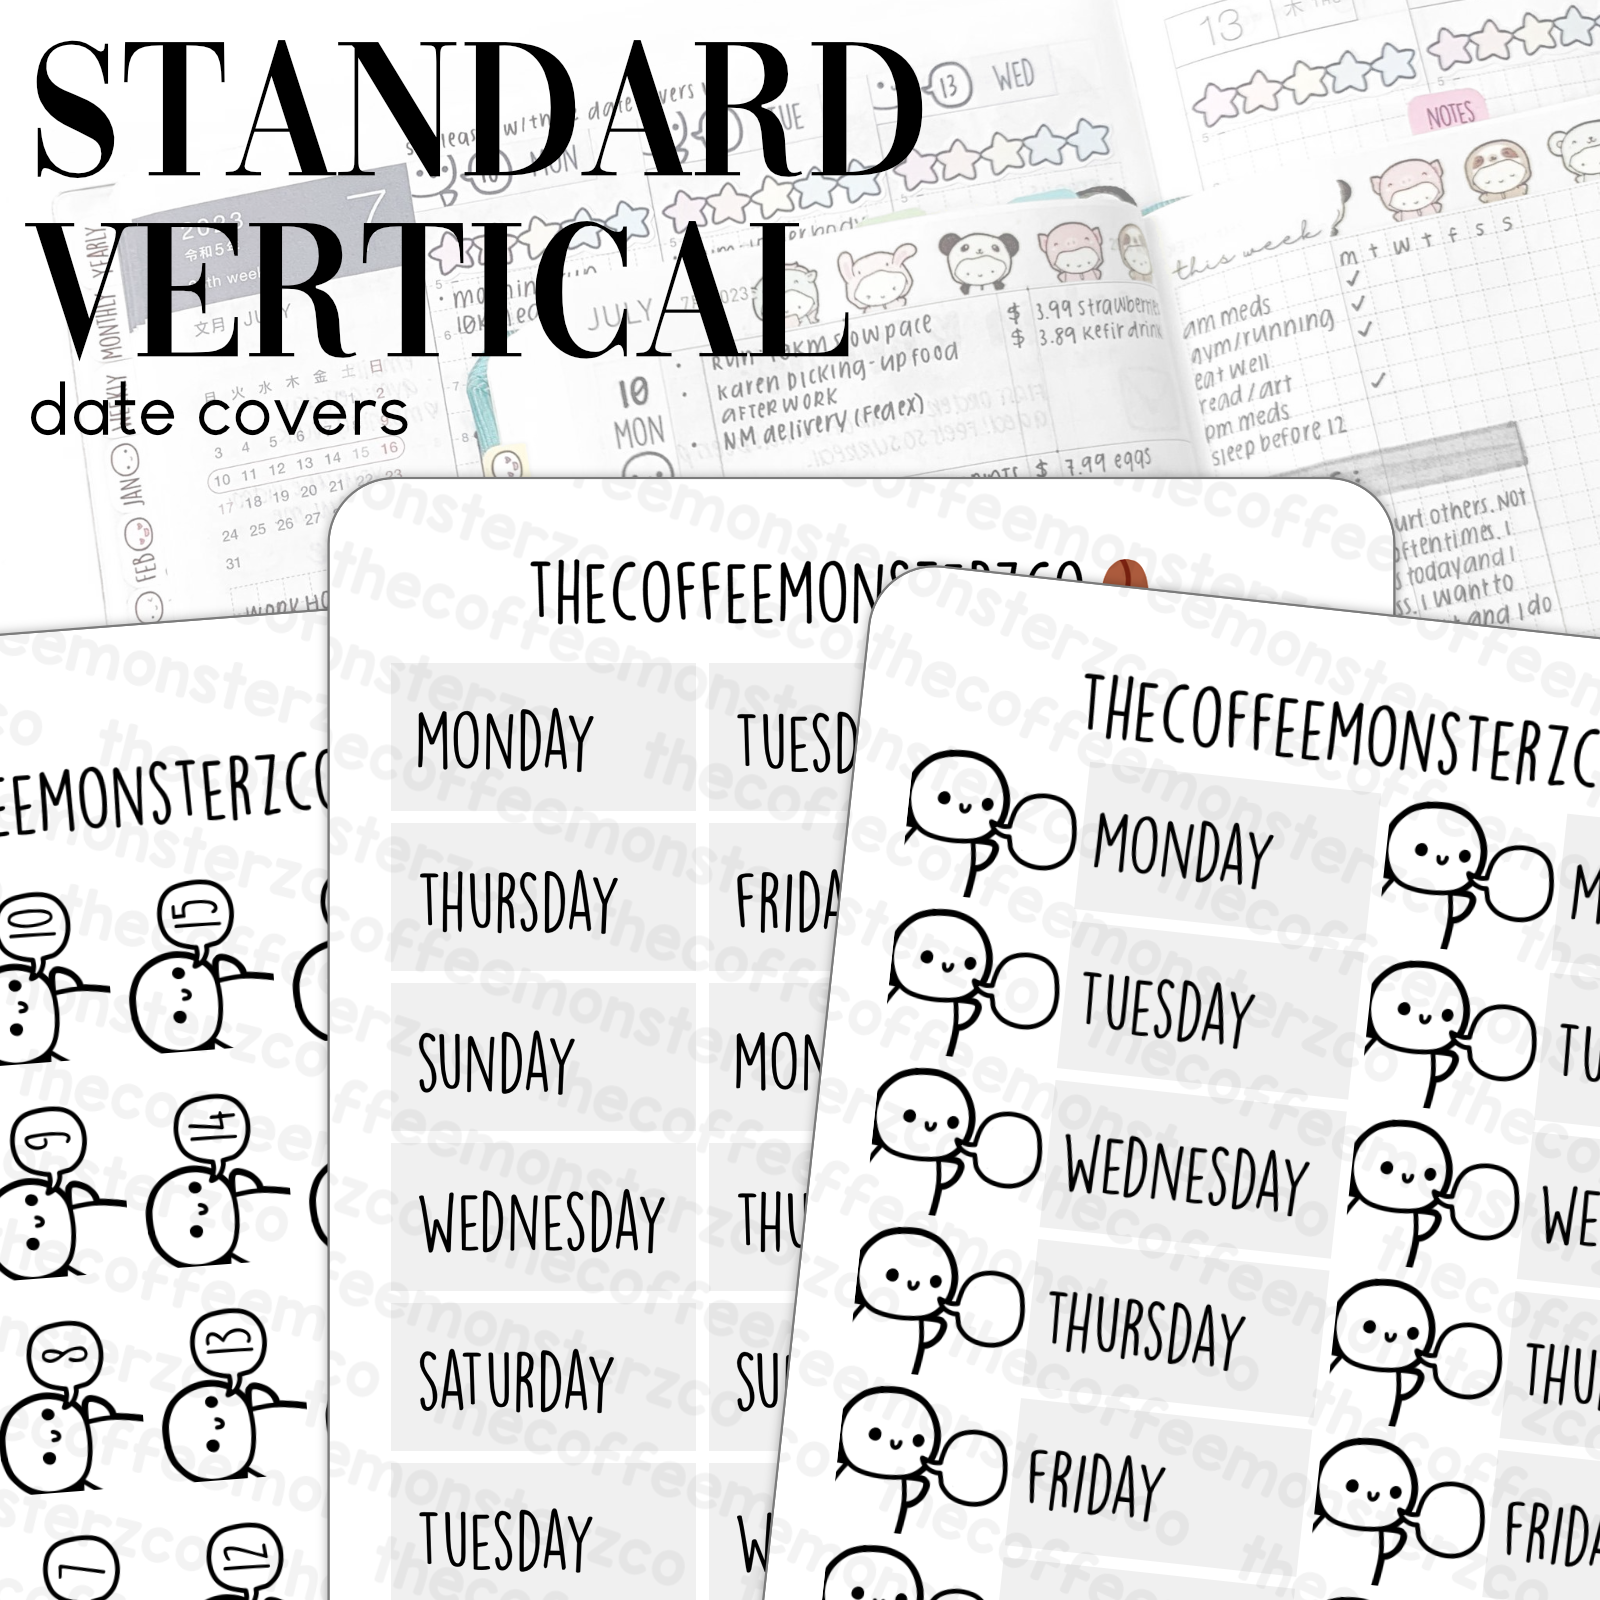 Standard Vertical Date Covers